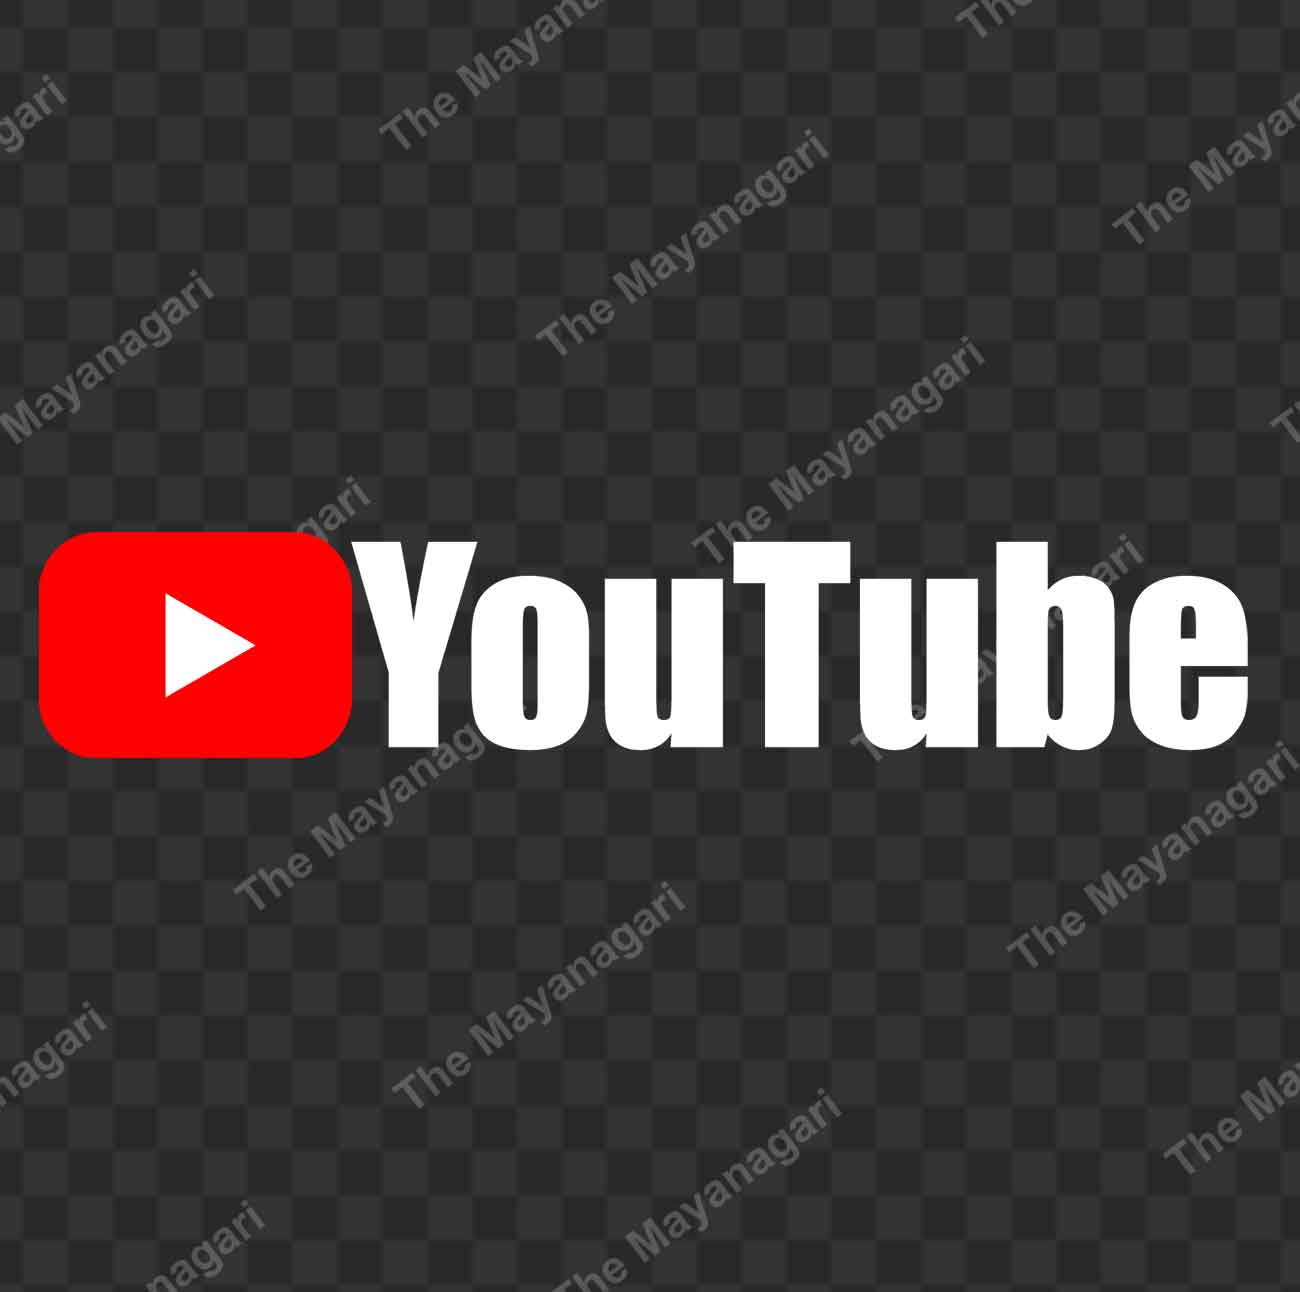 YouTube Logo Png Free Download - The Mayanagari